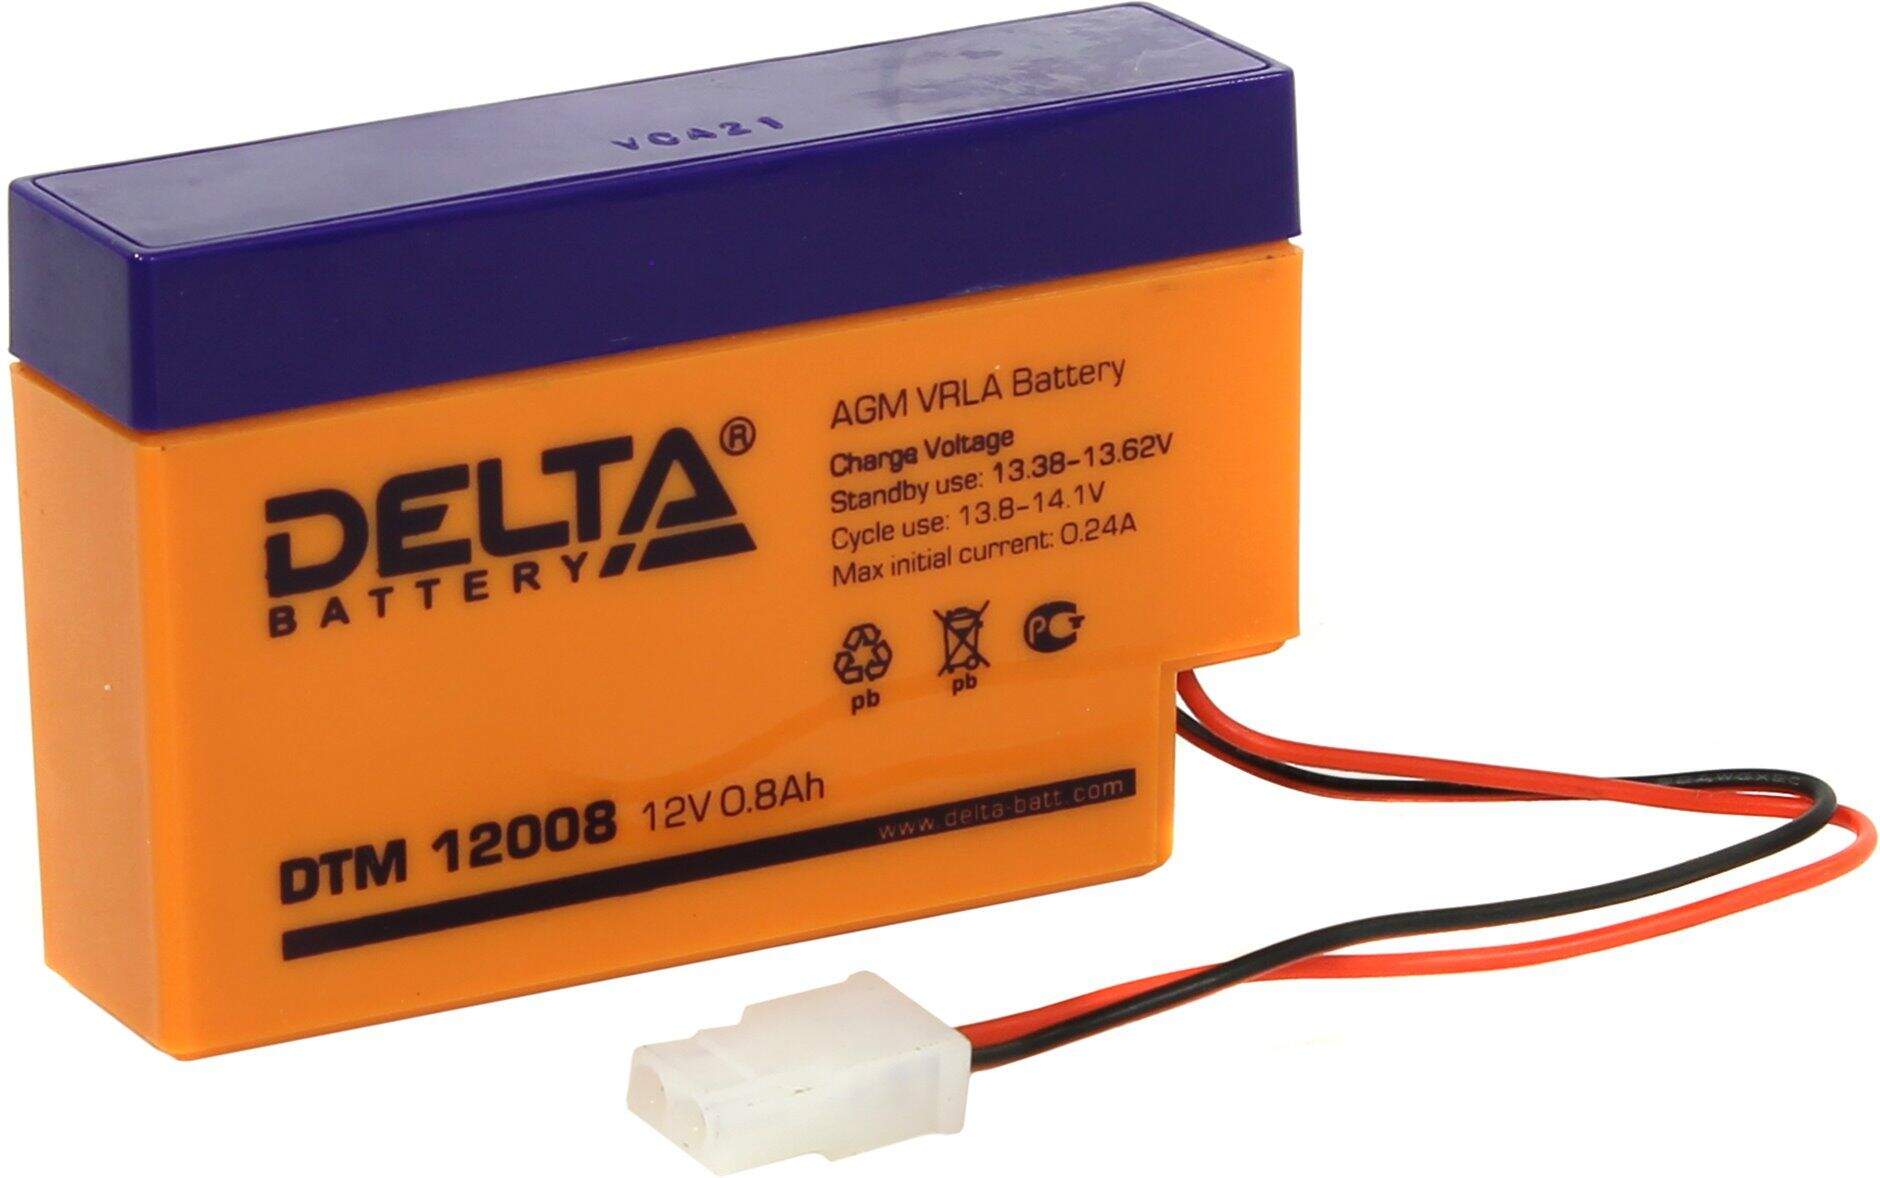 Battery voltage. Delta DTM 12008 12v 0.8Ah. Аккумулятор Delta DTM 12008 12v 0.8Ah. Аккумуляторная батарея Delta DTM 12008. Delta Battery DTM 12008 12в, 0,8 Ач.